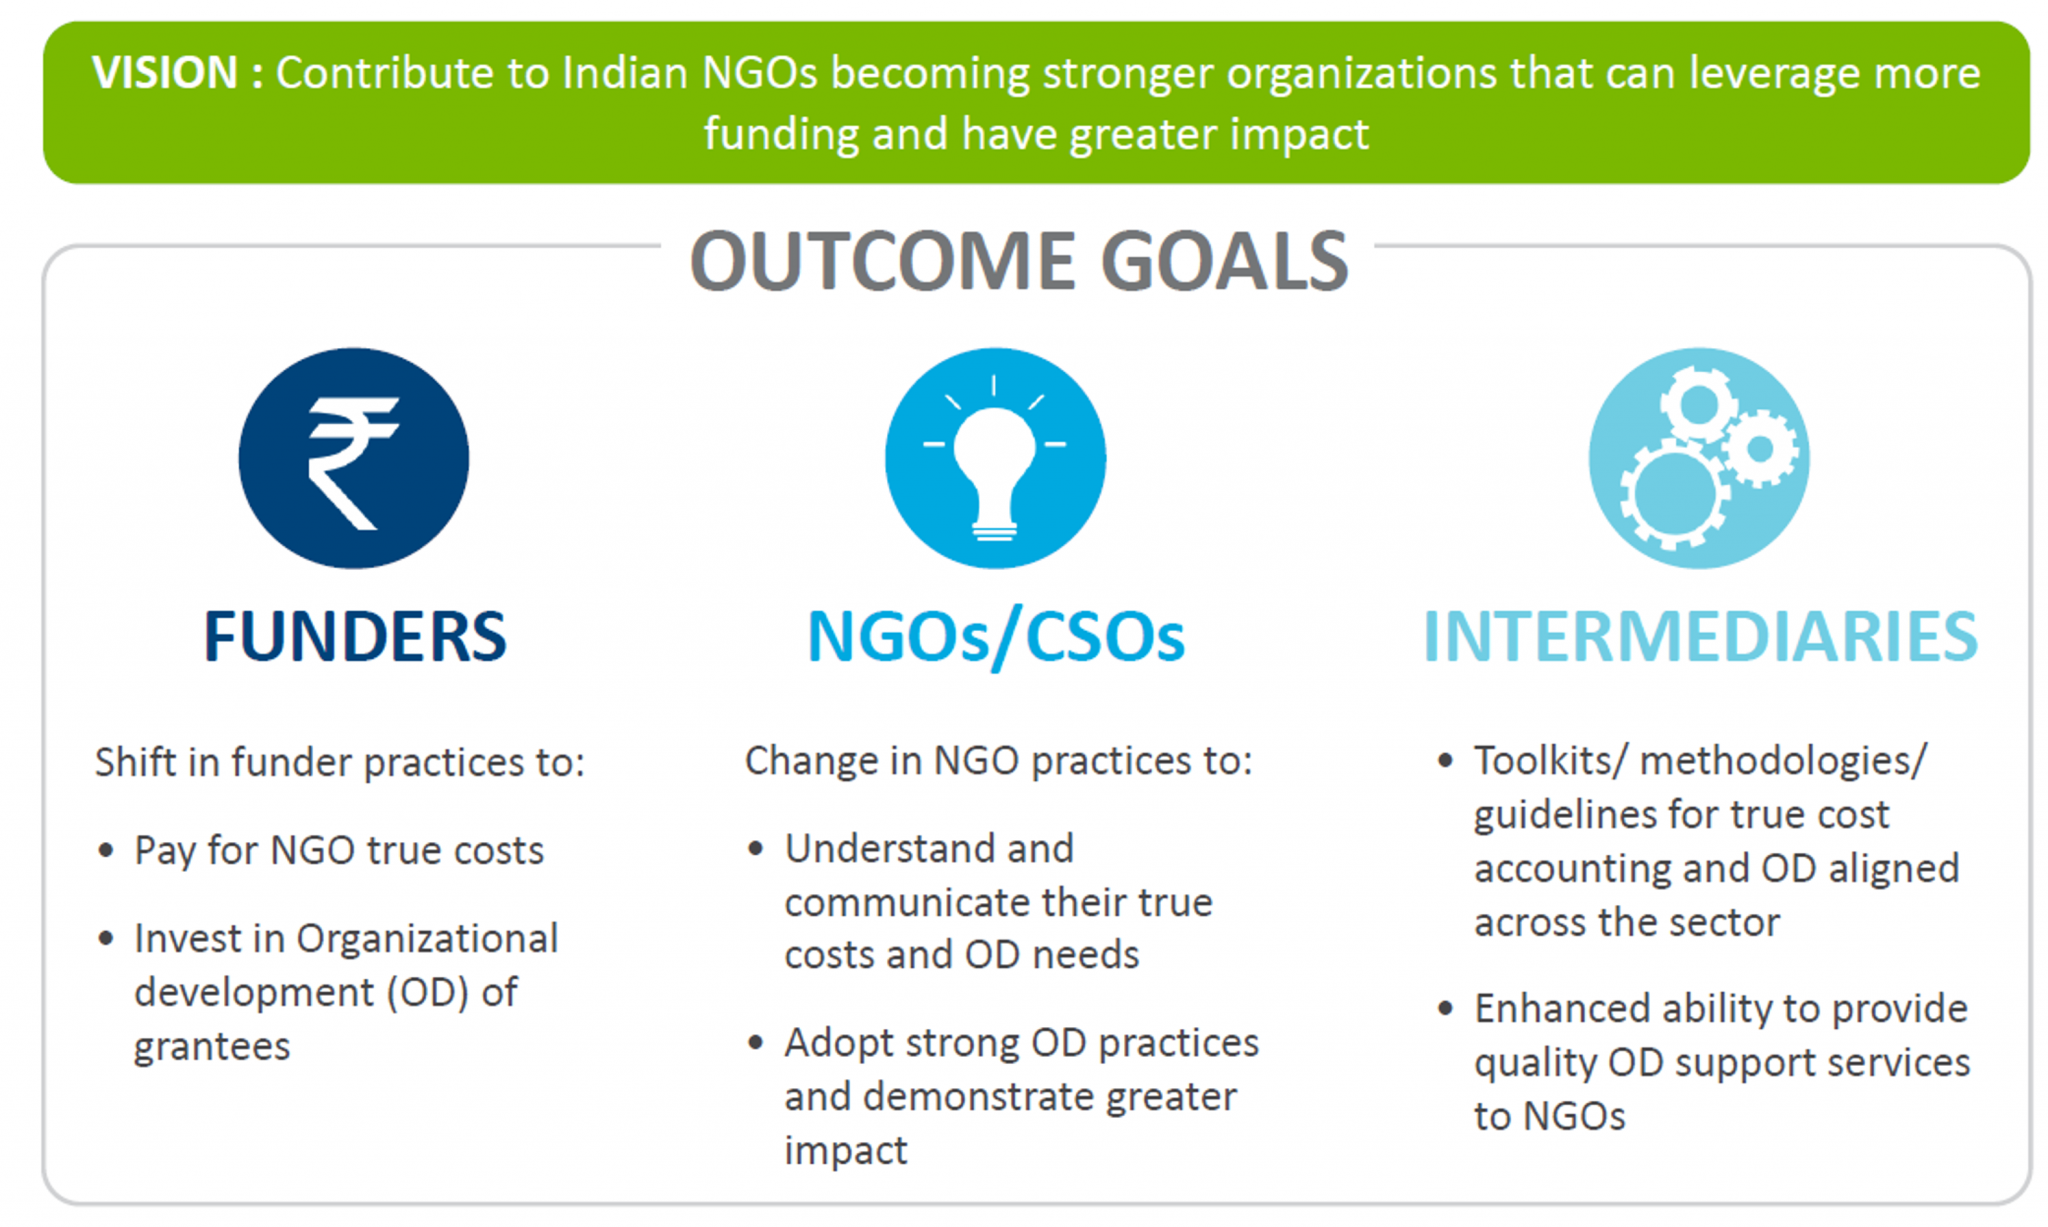 case study of ngos in india